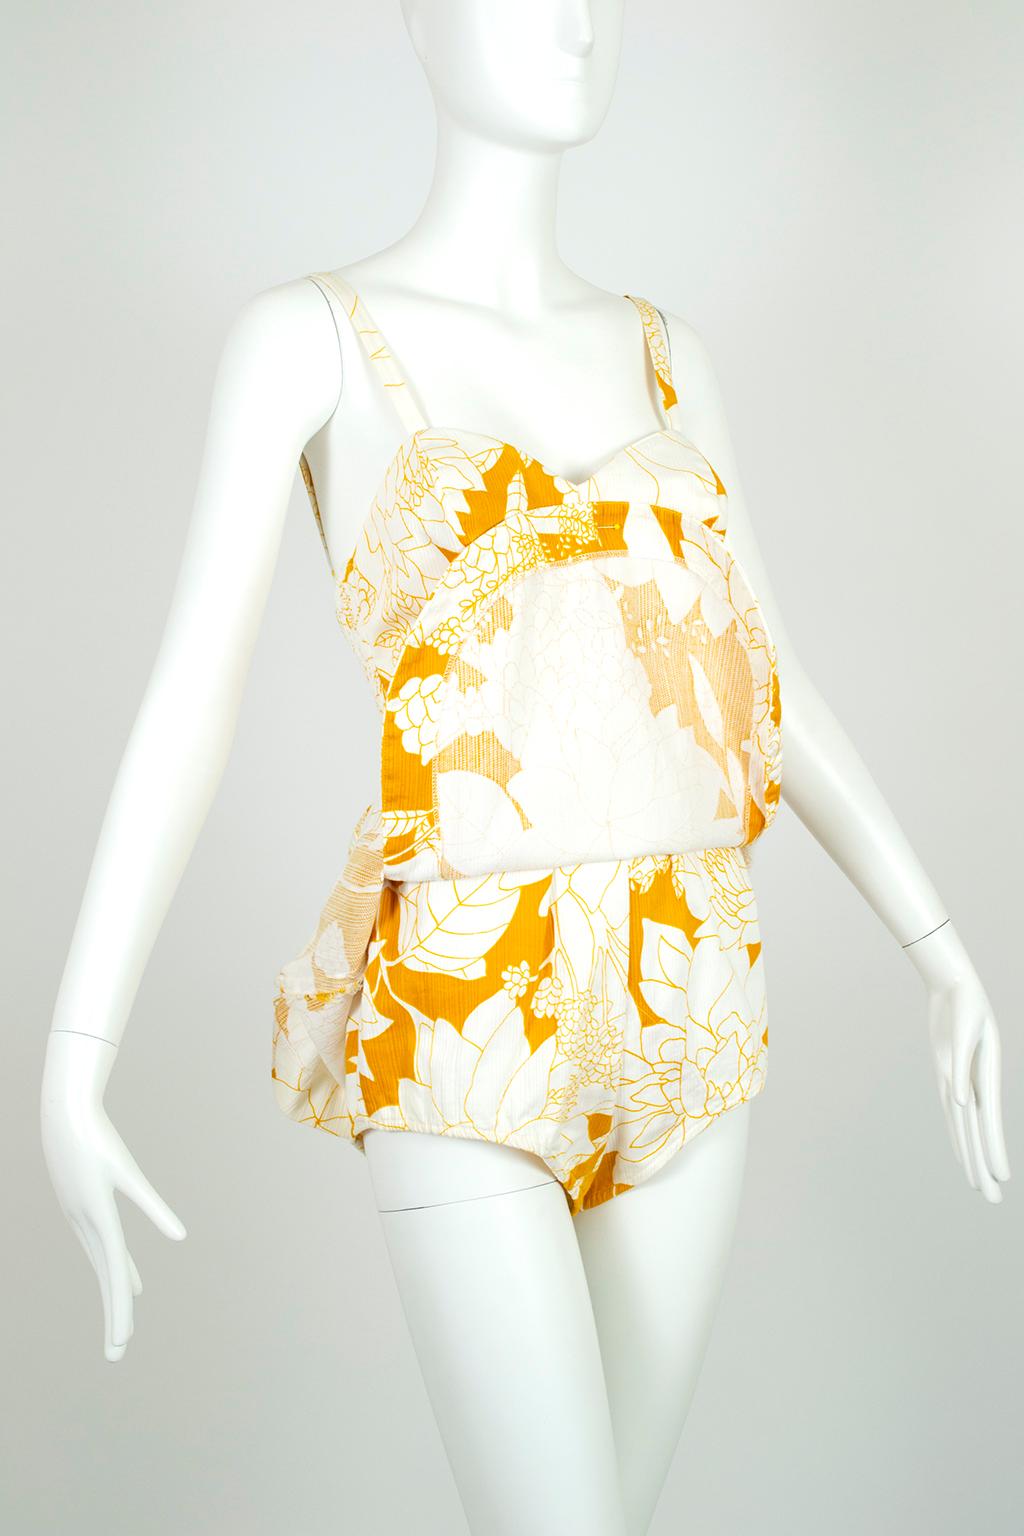 Women's Yellow Polynesian Print Tulip Skirt Swimsuit Play Suit Beach Romper – S, 1950s For Sale